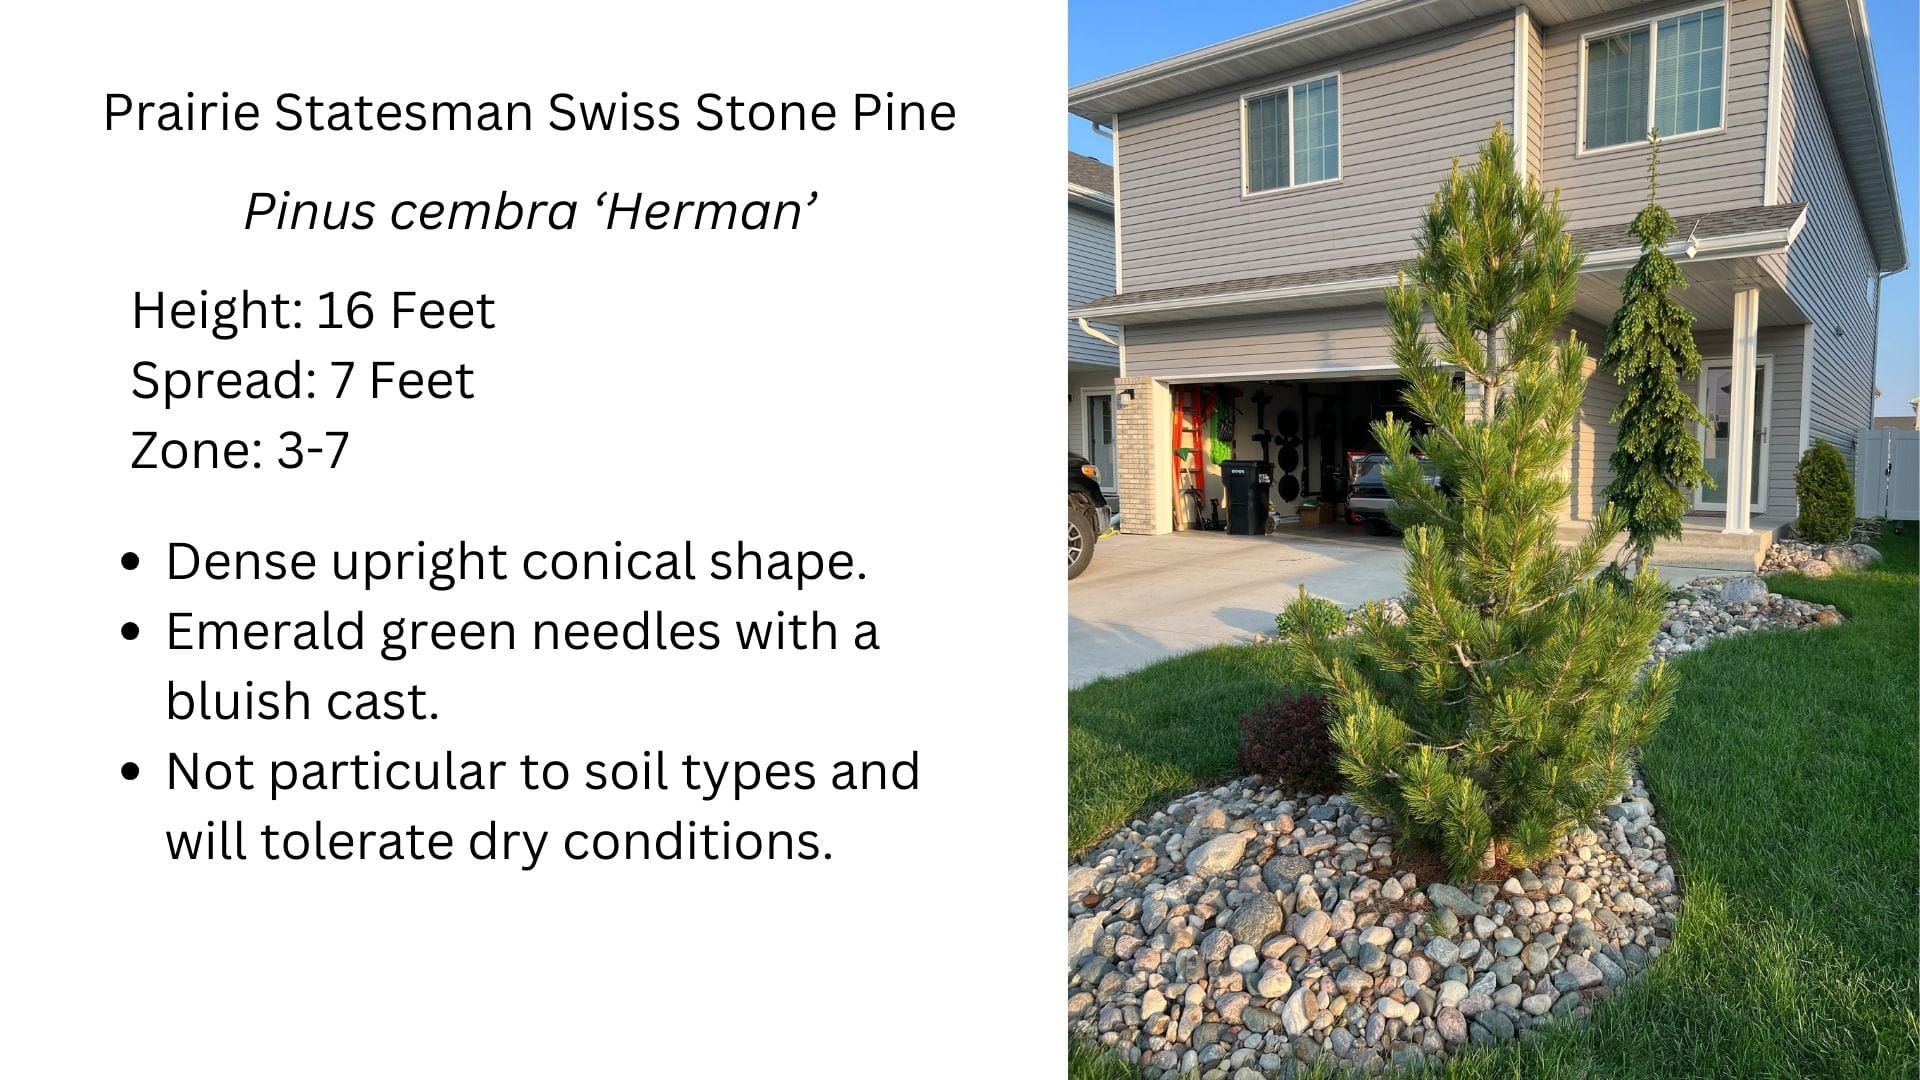 Prairie Statesman Swiss Stone Pine, Pinus cembra 'Herman'